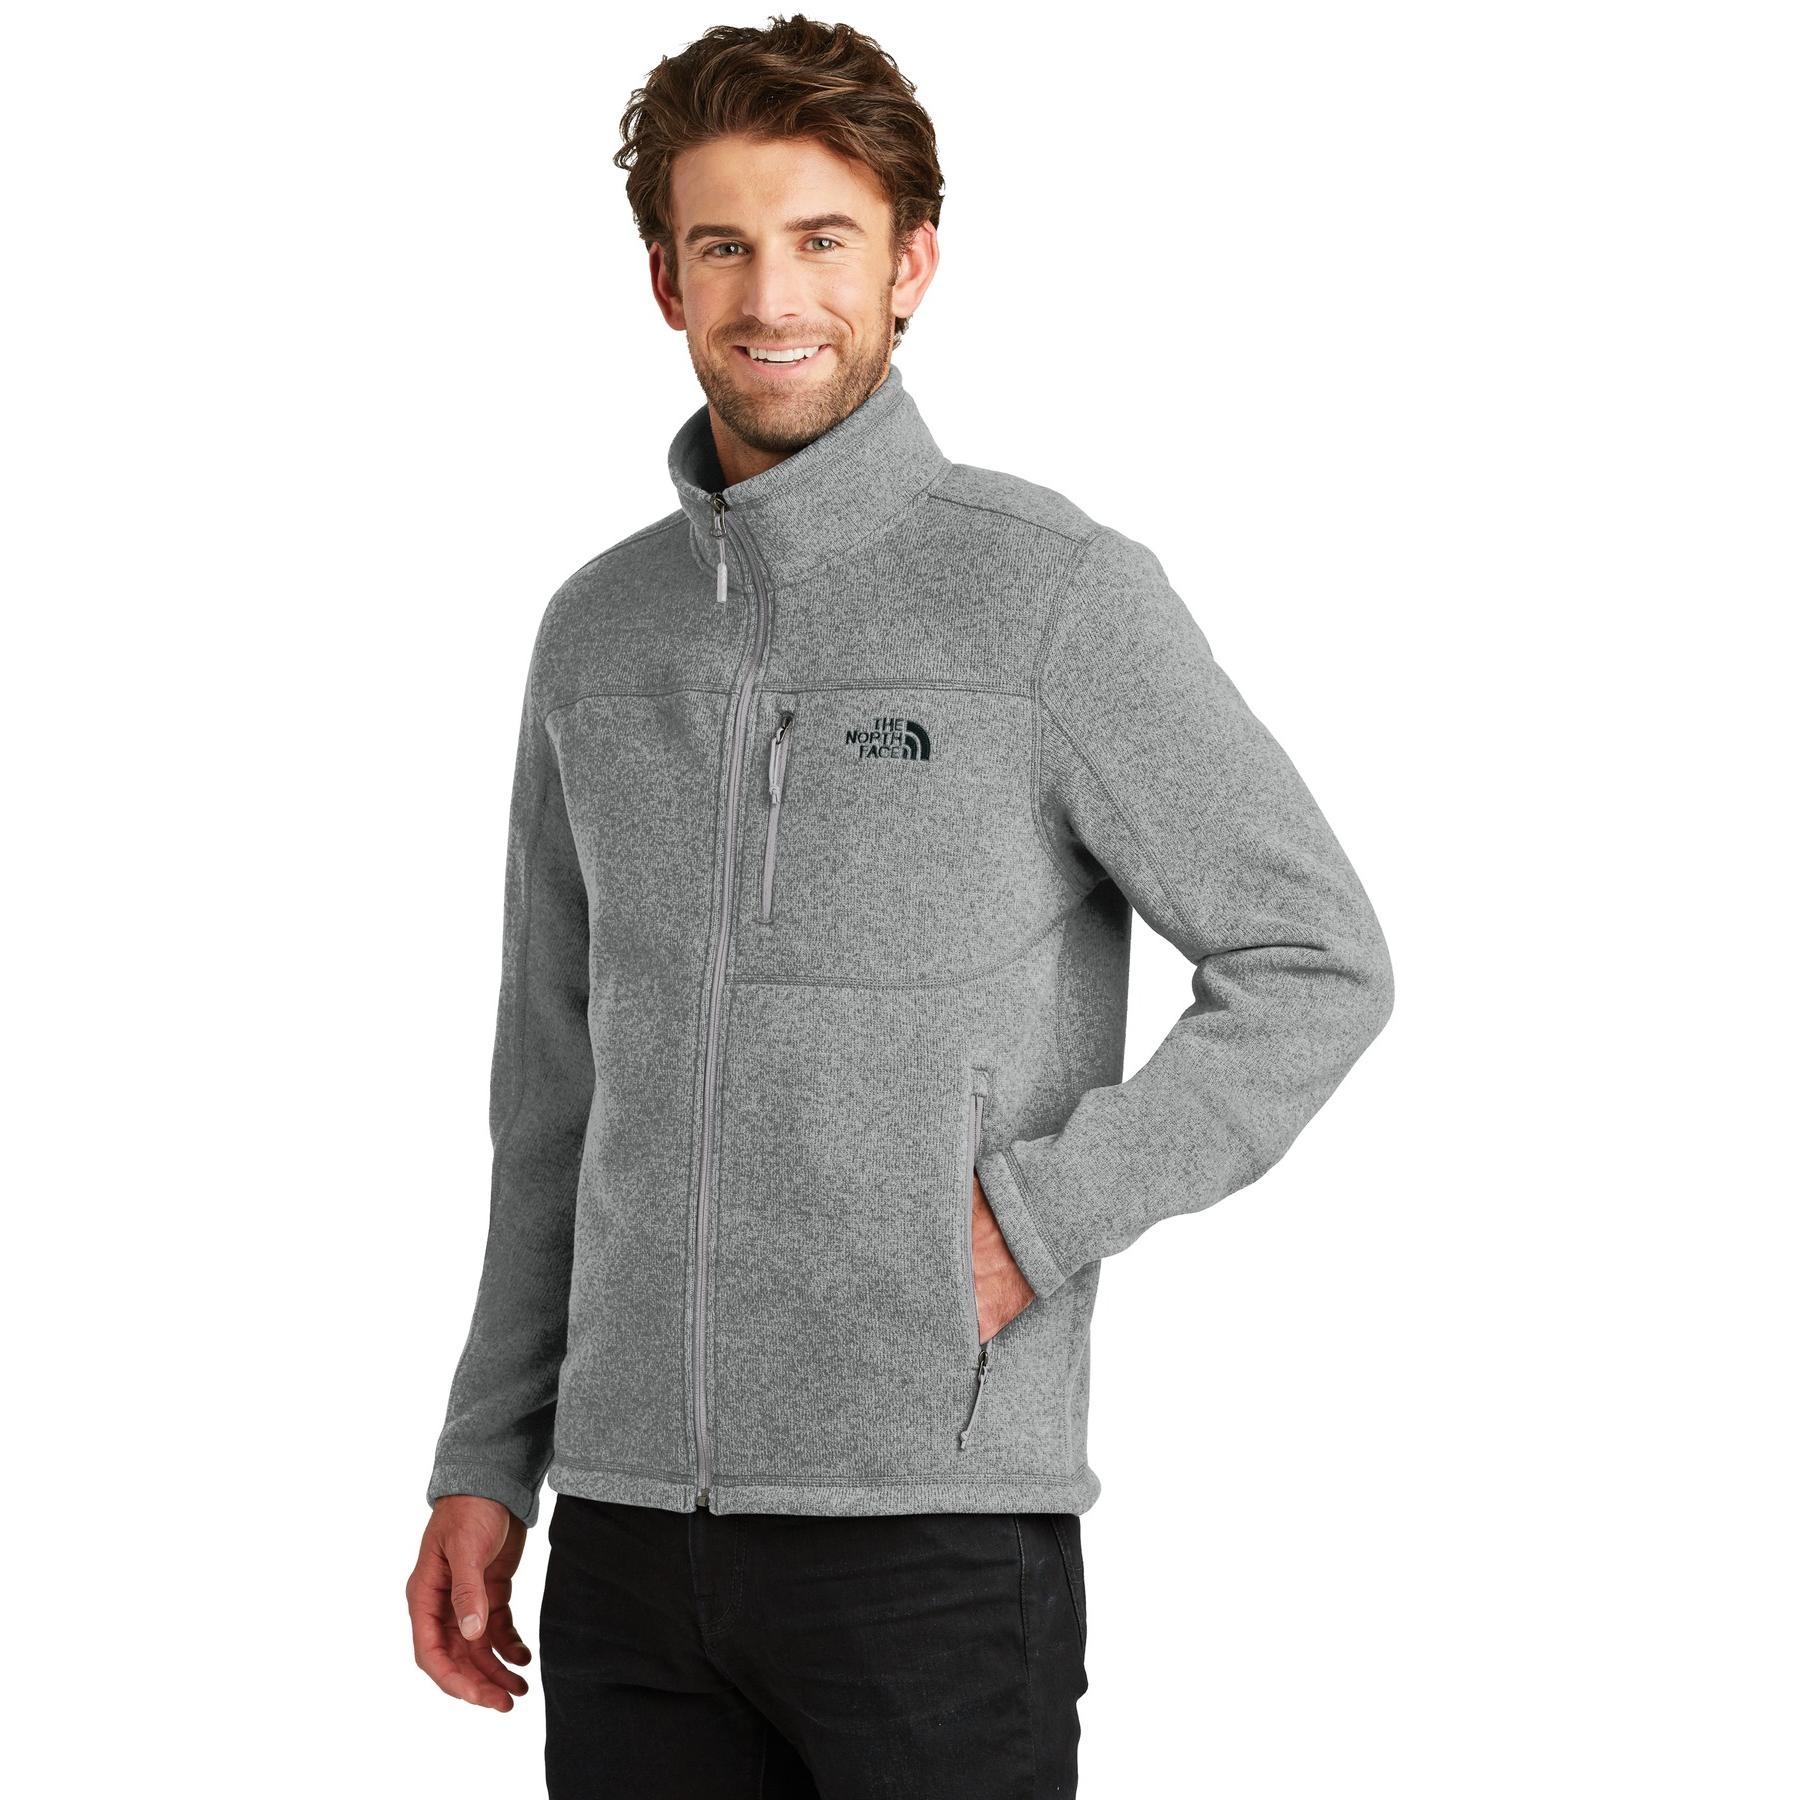 The North Face NF0A3LH7 Sweater Fleece Jacket - Medium Grey Heather ...